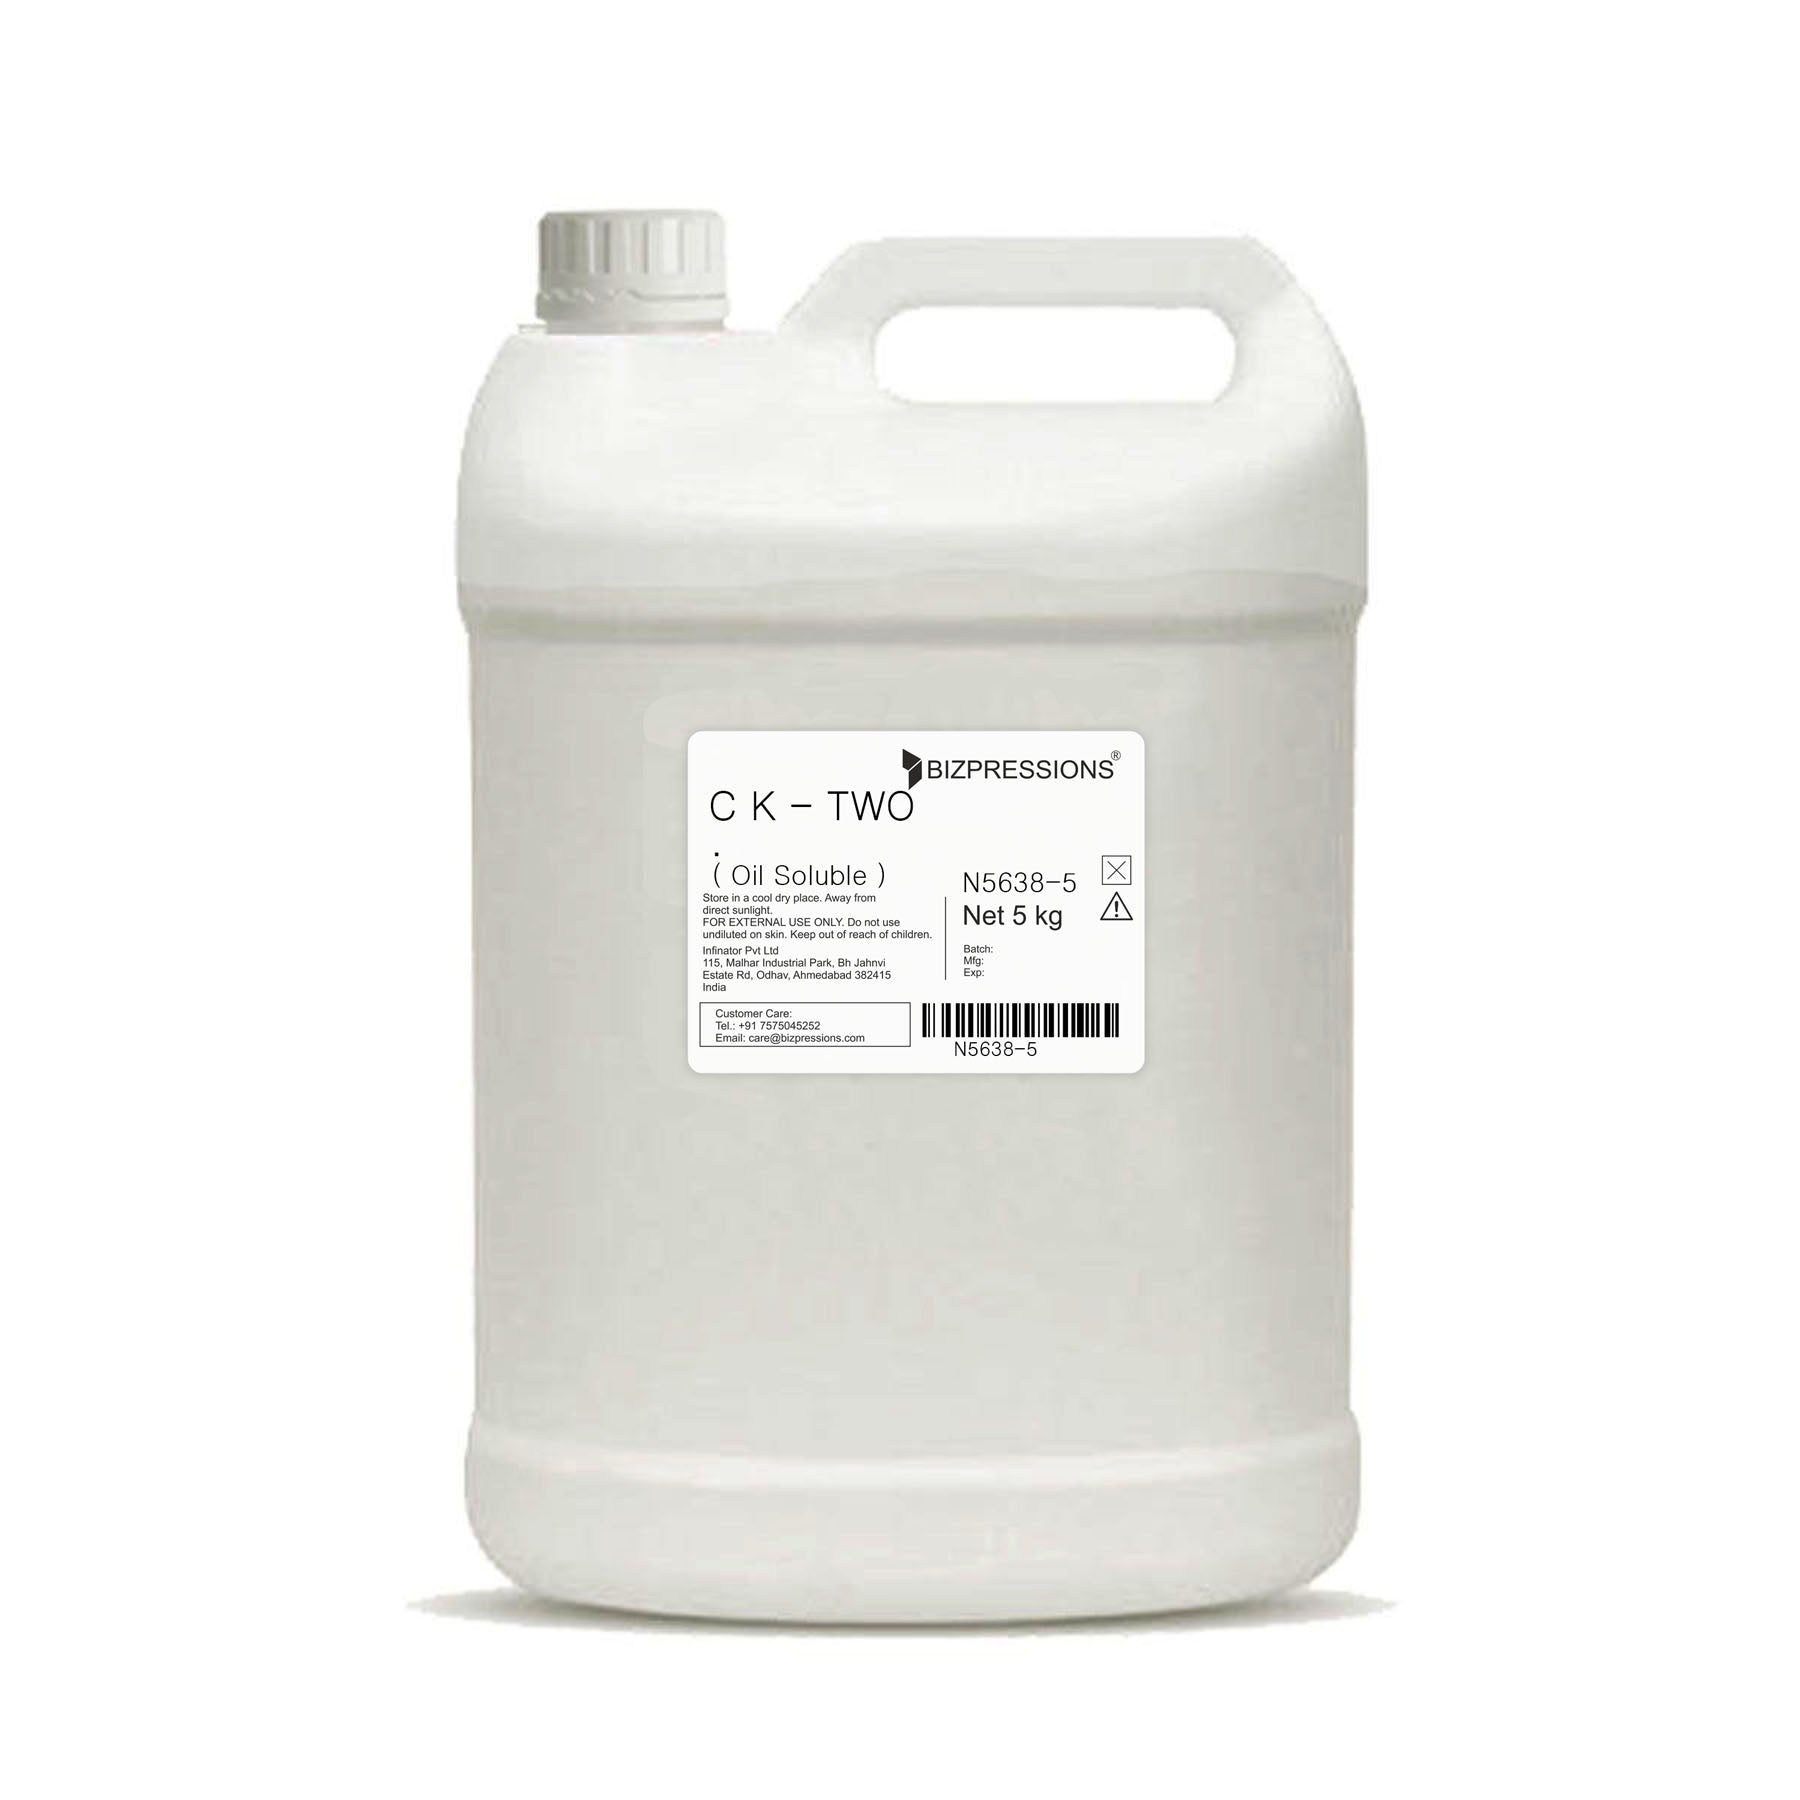 C K - TWO - Fragrance ( Oil Soluble ) - 5 kg